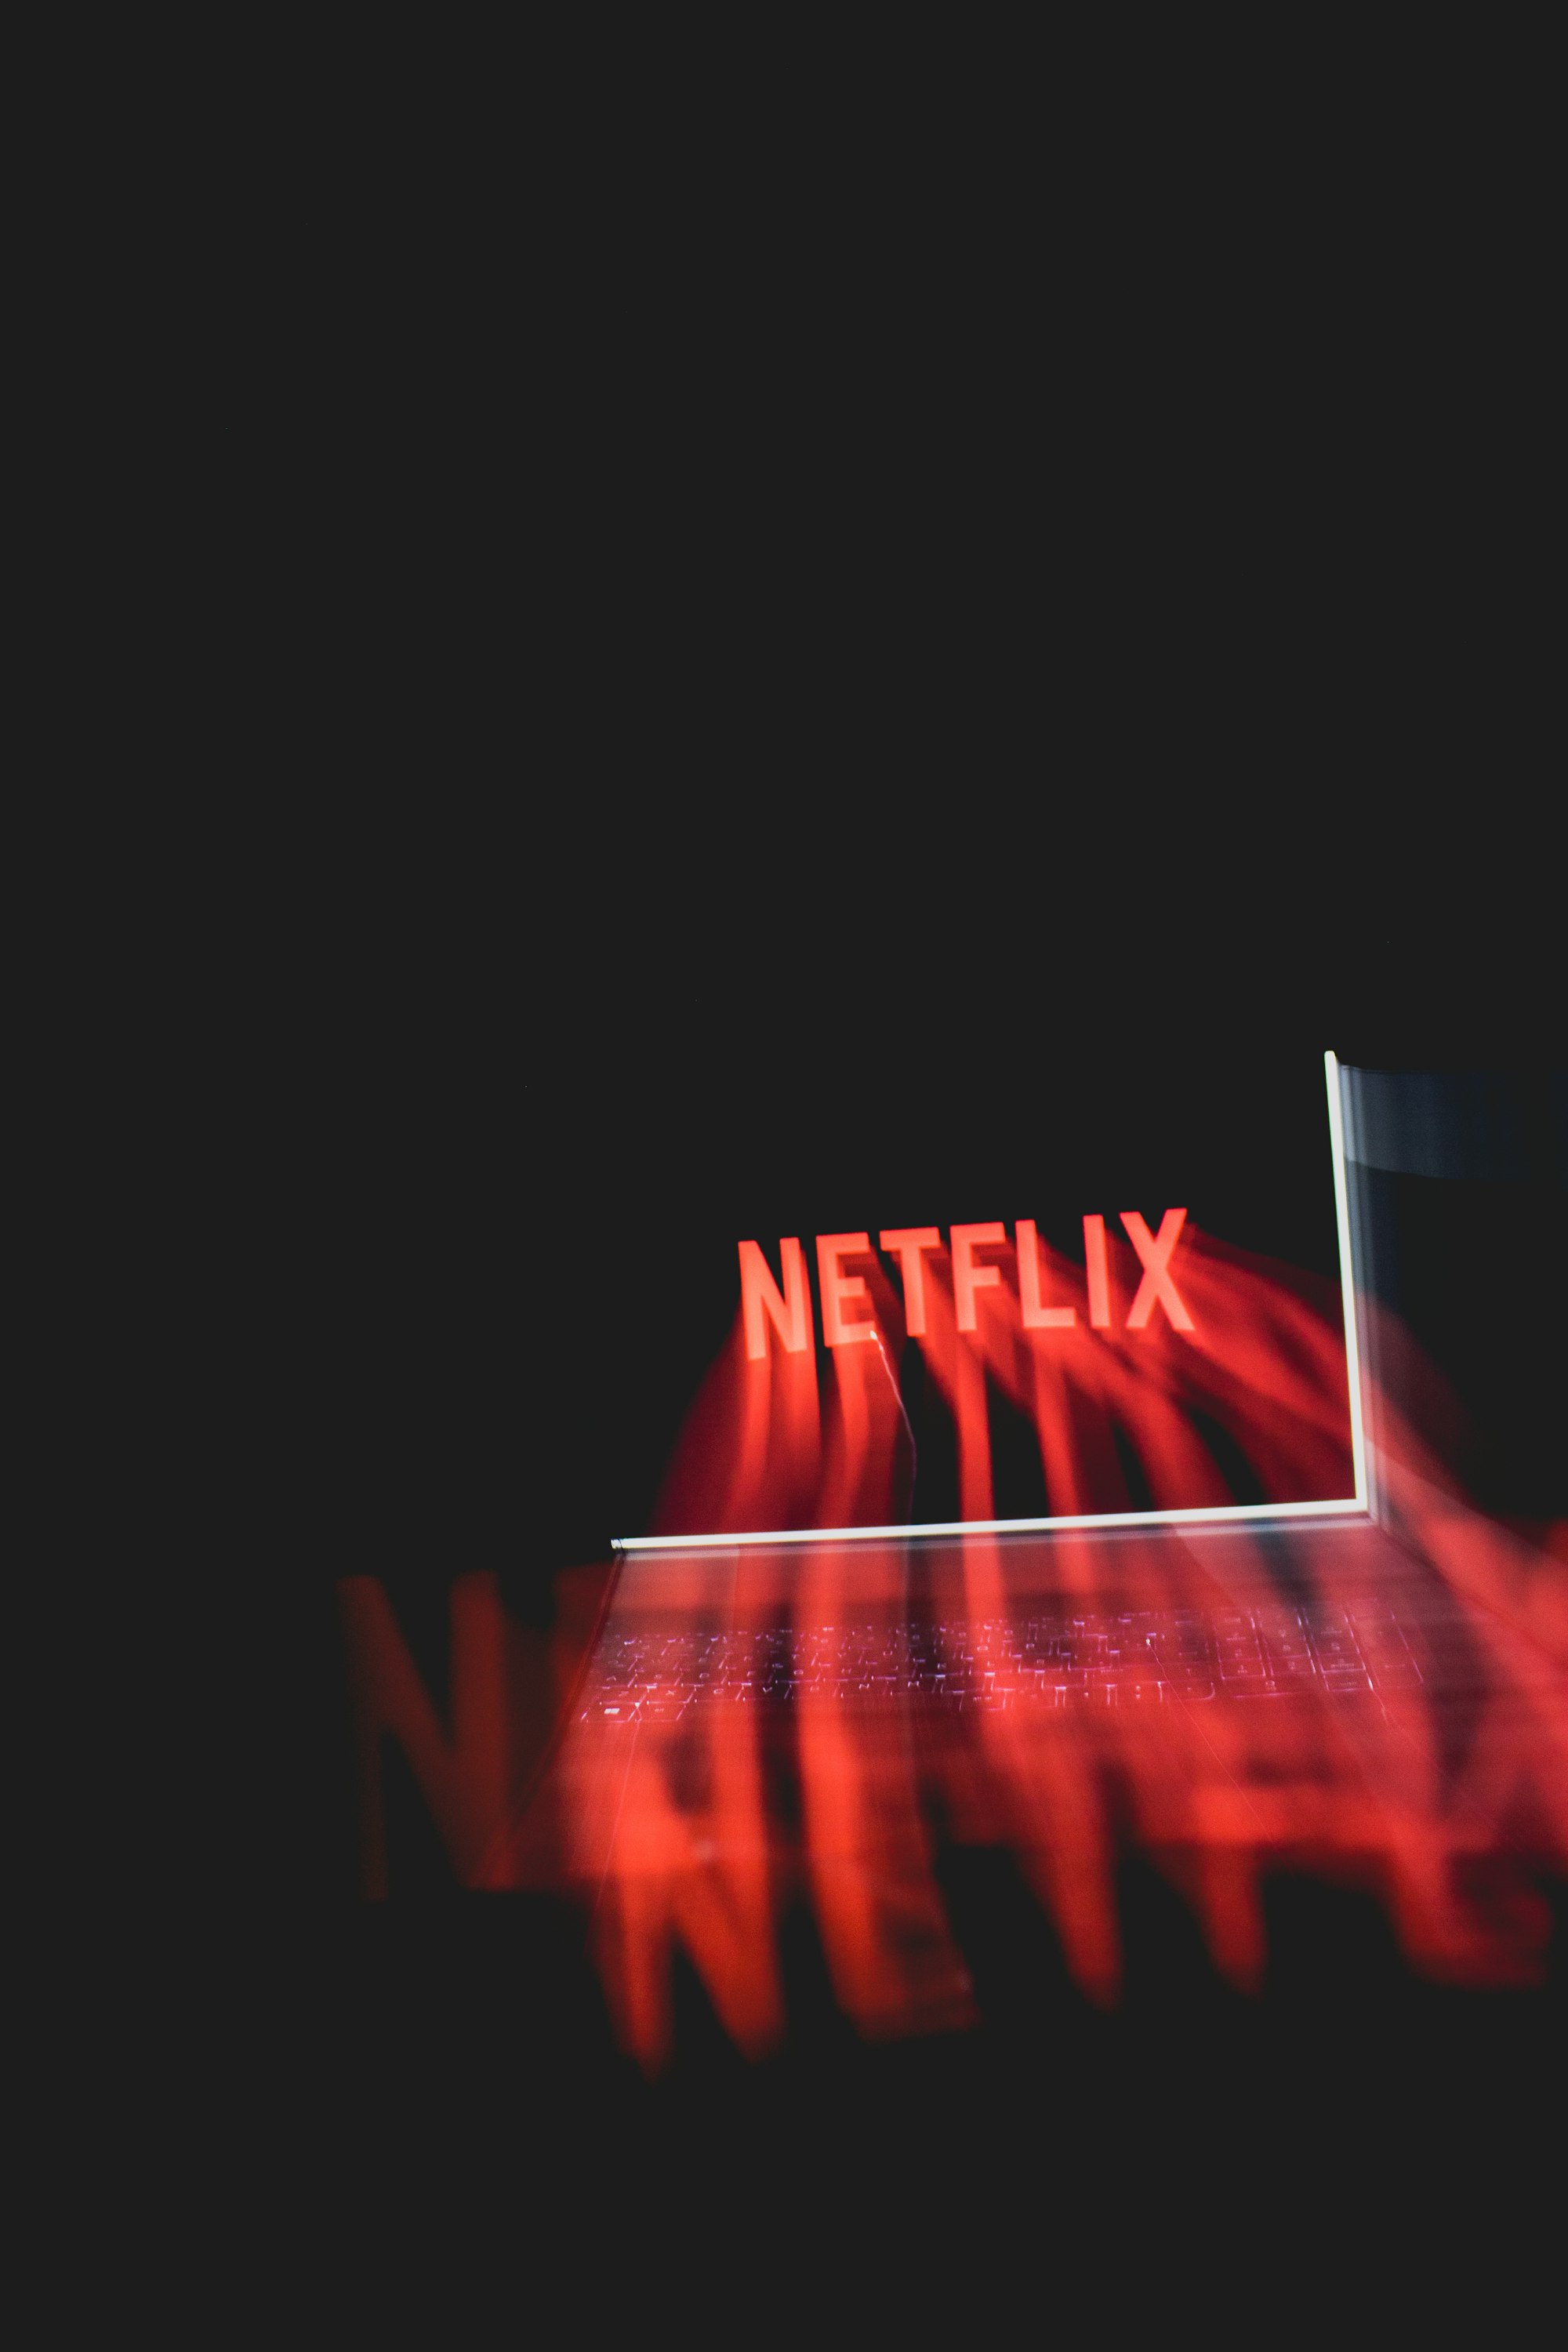 Netflix is down $54 billion